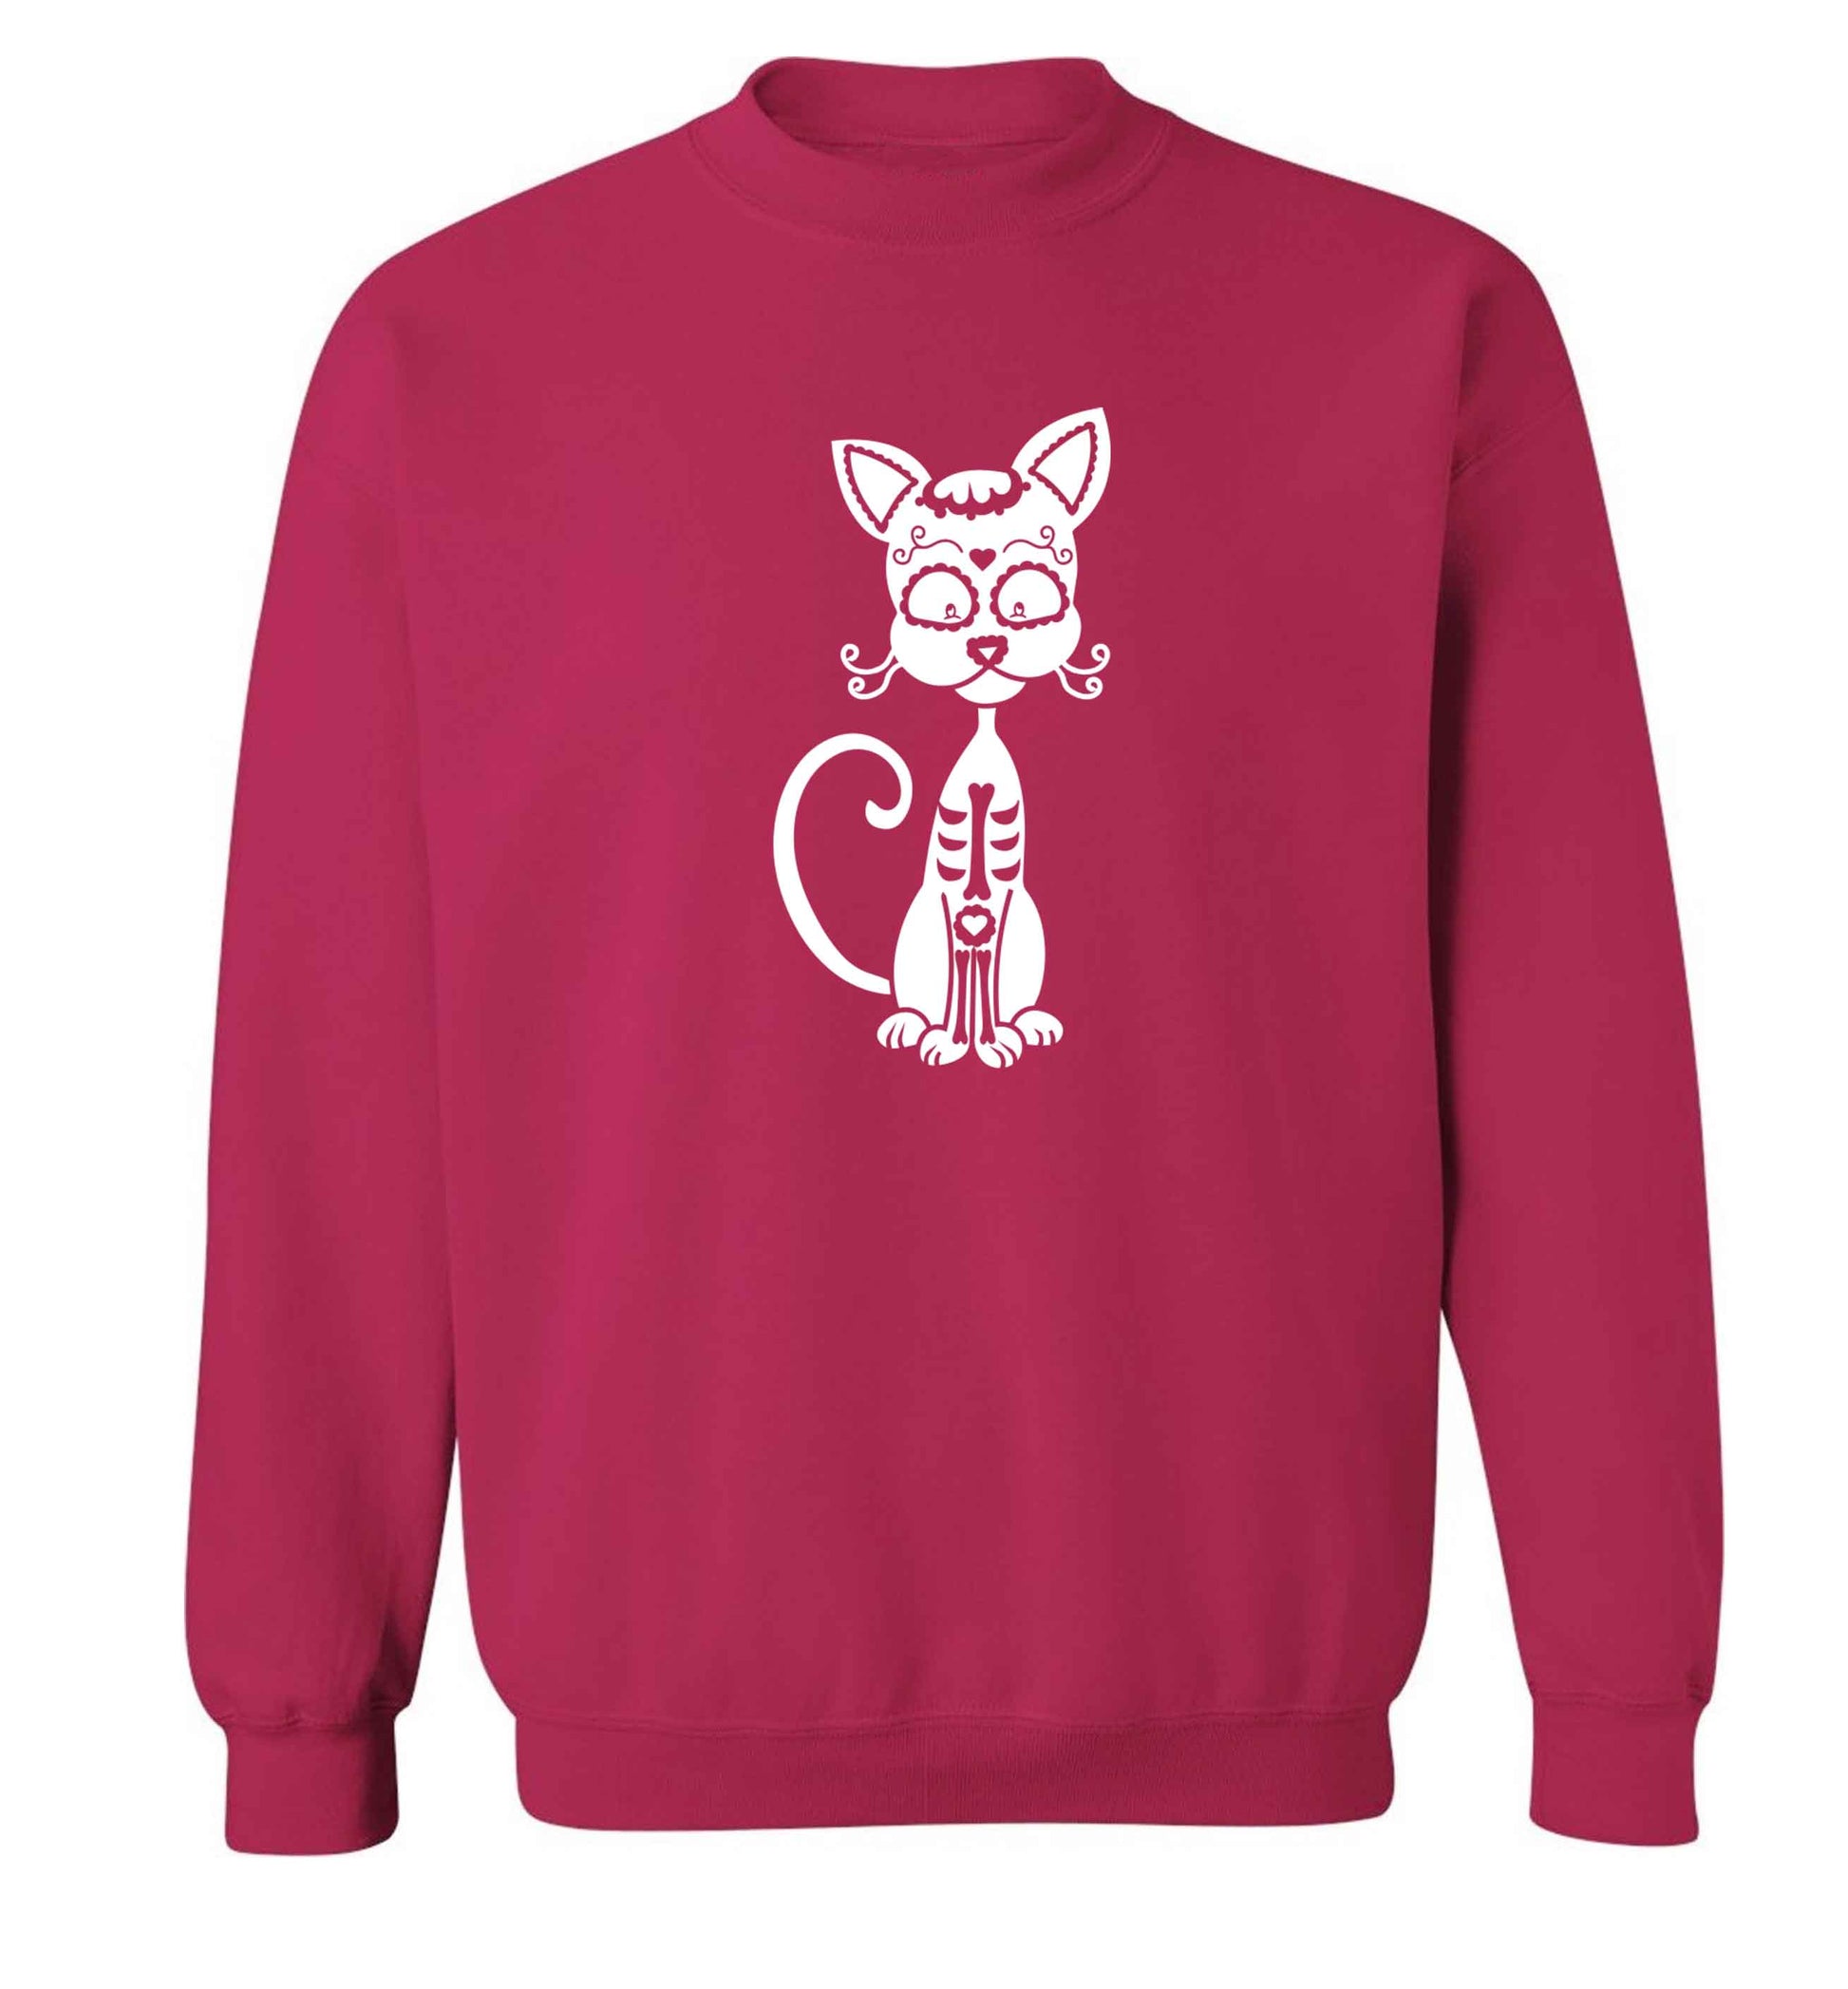 Cat sugar skull adult's unisex pink sweater 2XL